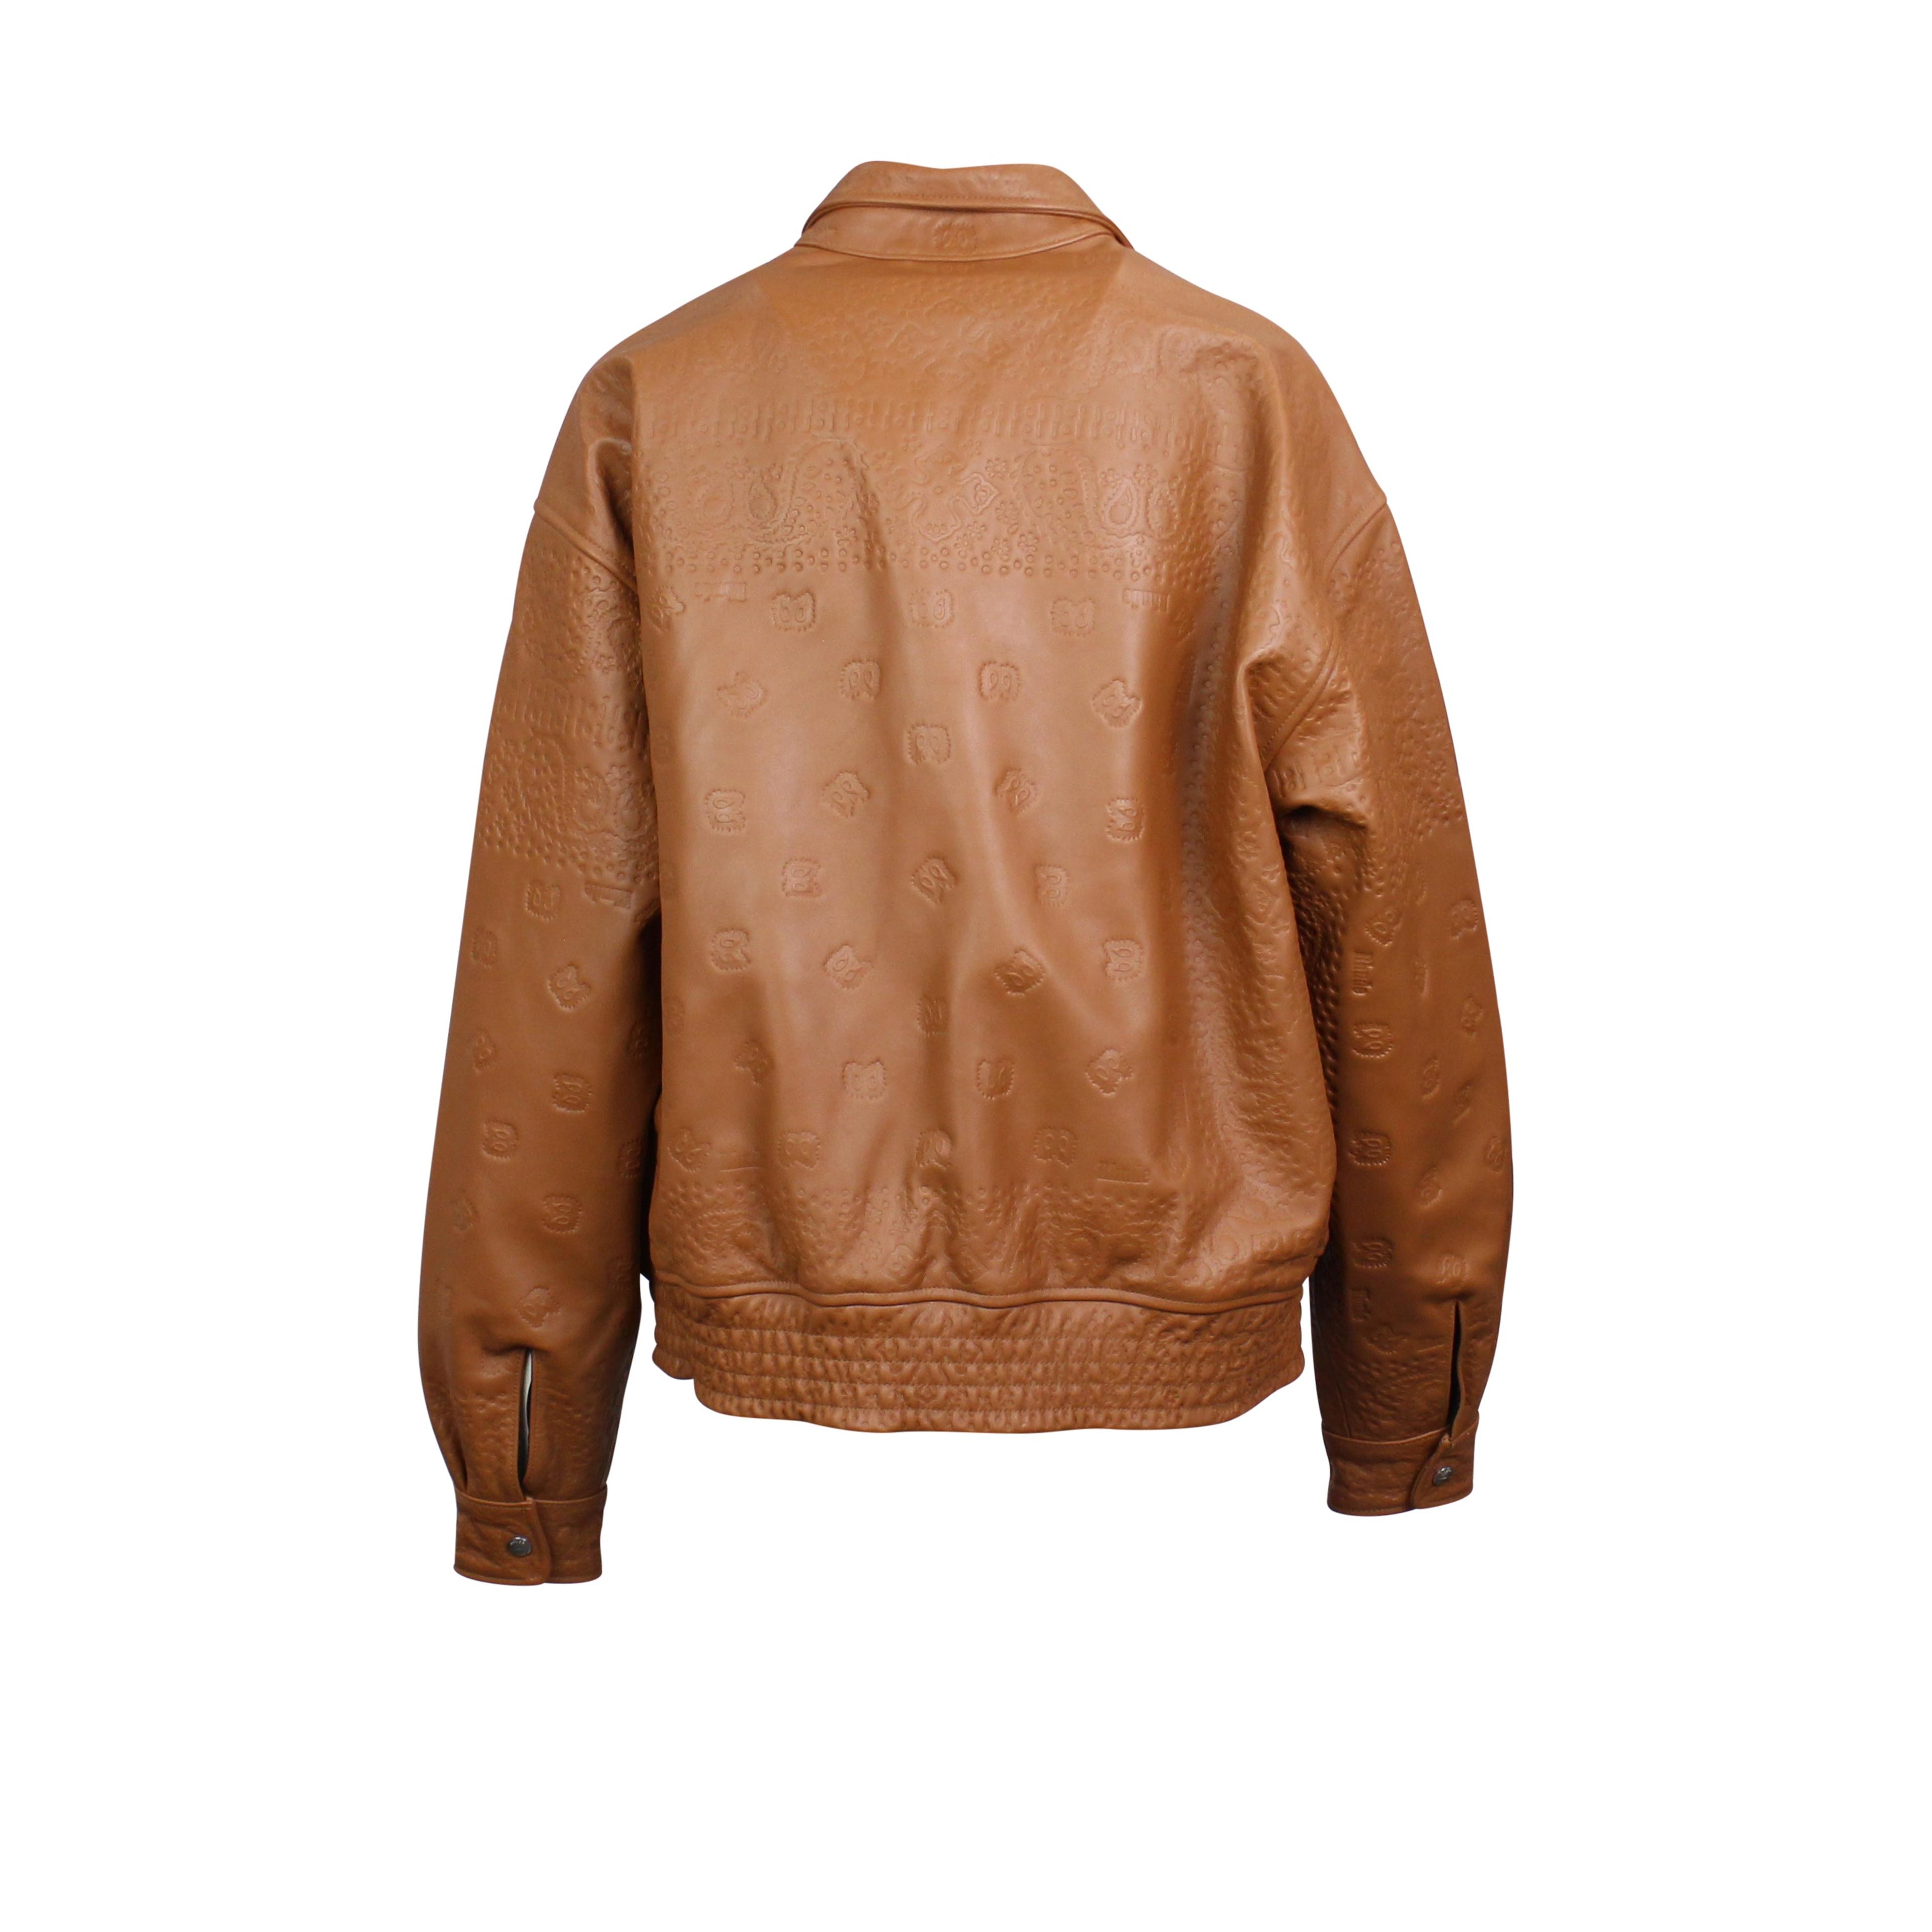 Alternate View 3 of Tan Brown Embossed Blouson Leather Suiting Jacket